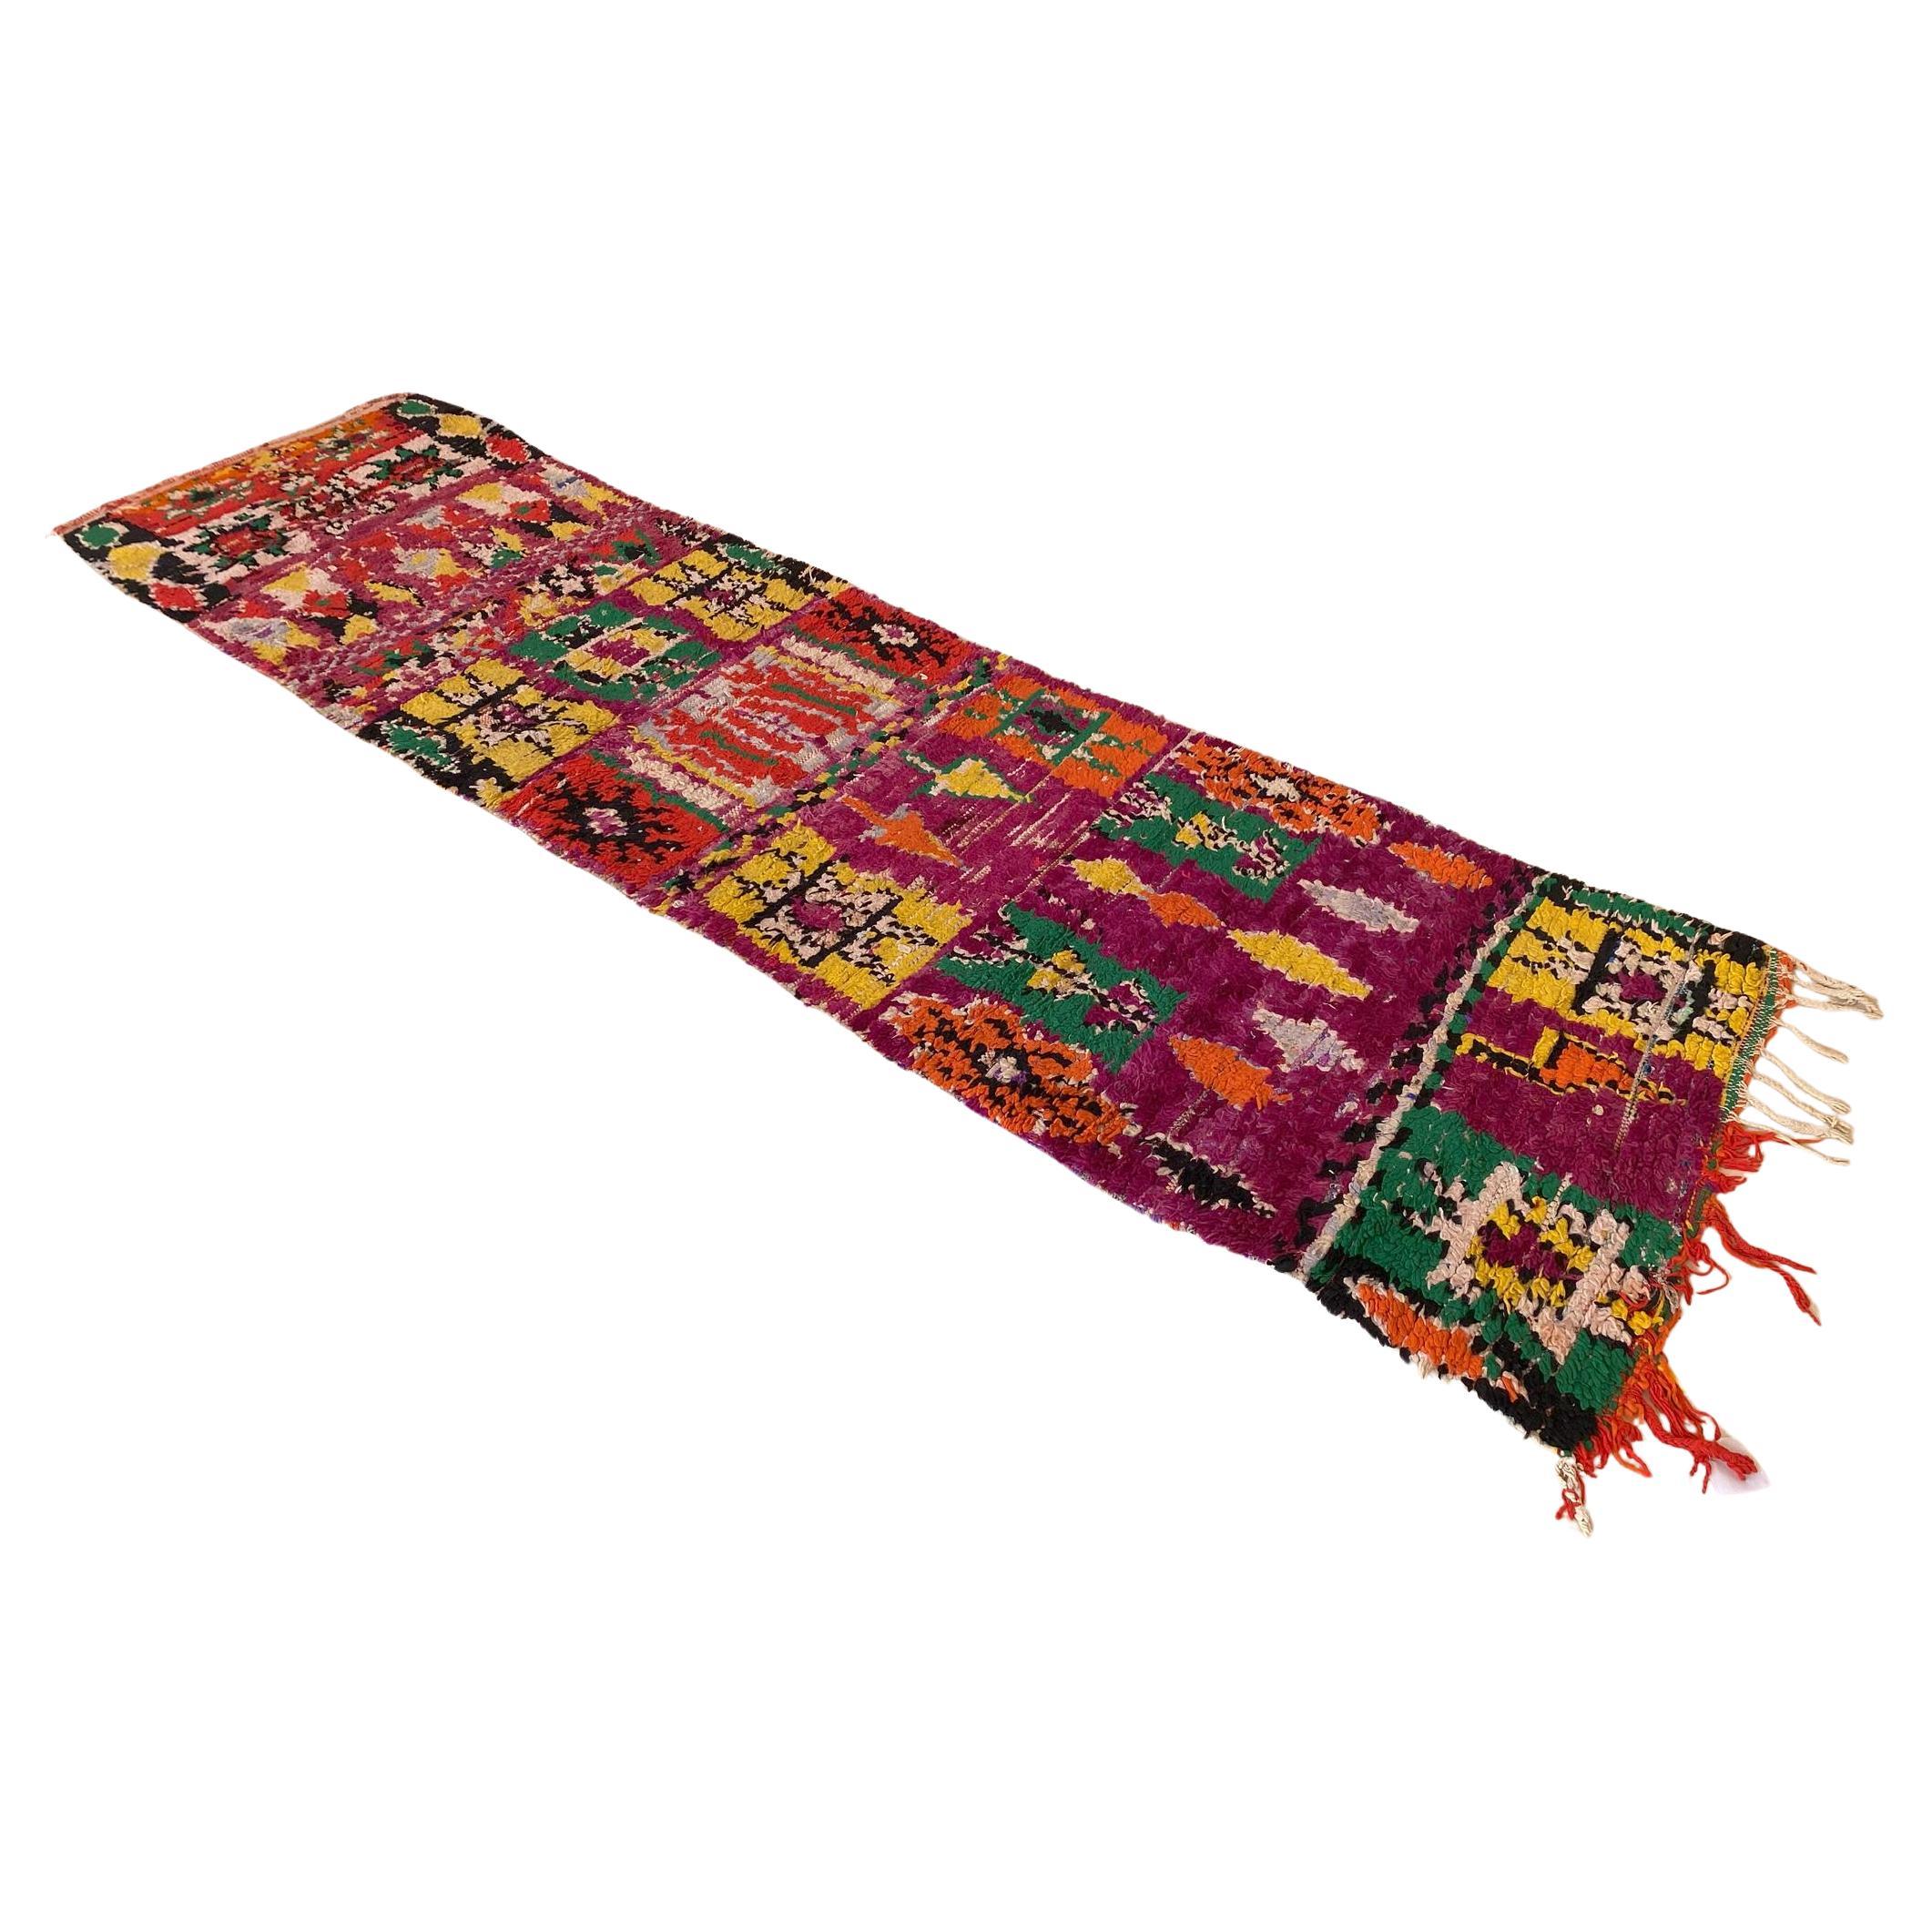 Vintage Moroccan runner rug - Purple/green/orange - 2.8x11.5feet / 87x352cm For Sale